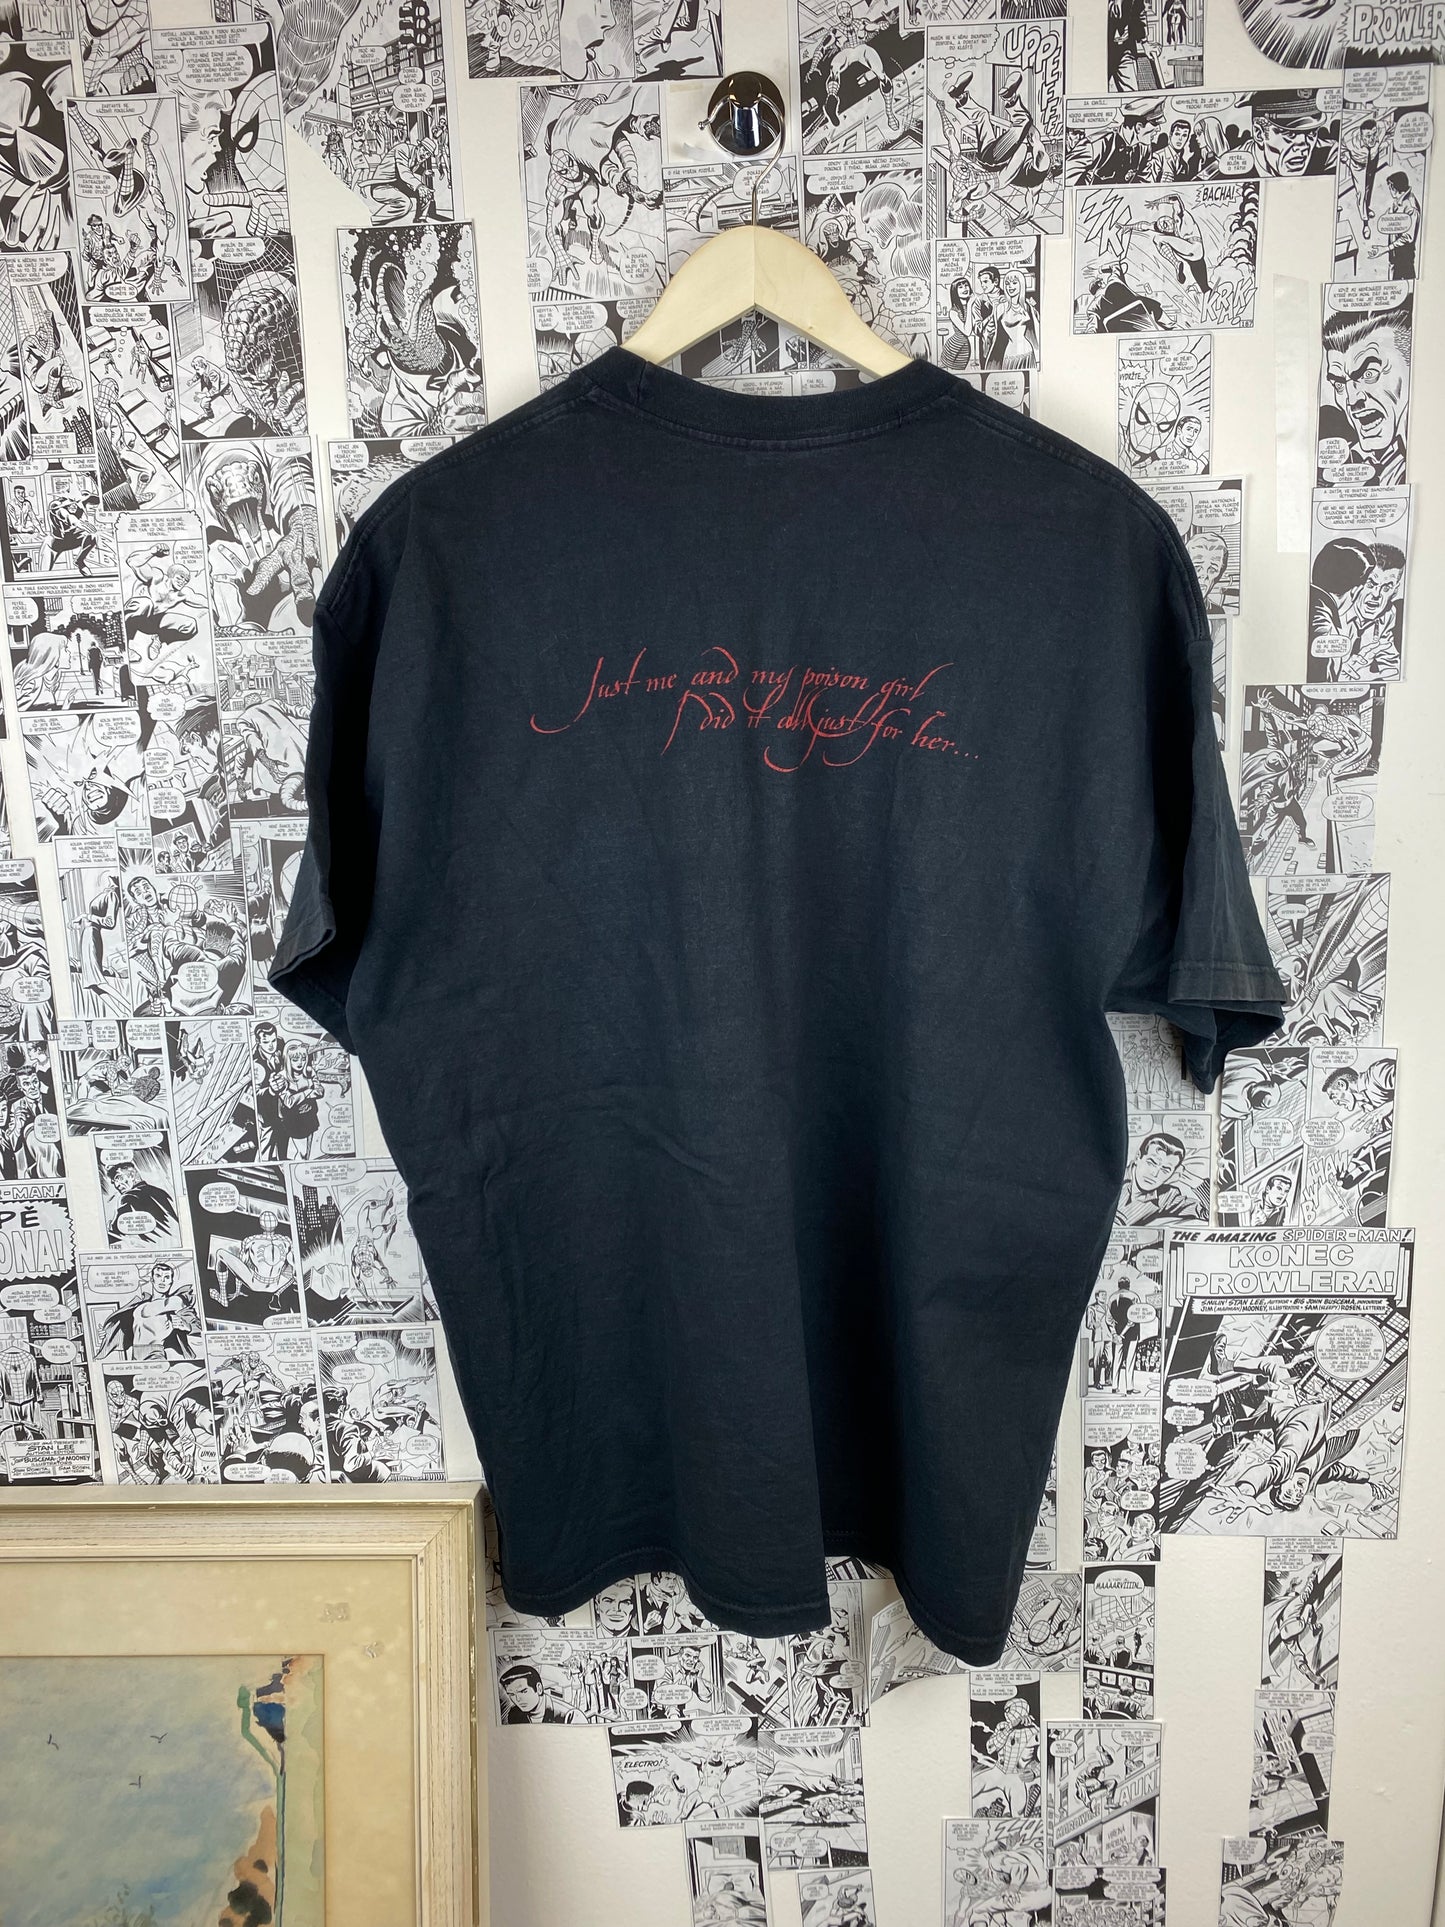 Vintage HIM “Poison Girl” t-shirt - size XL